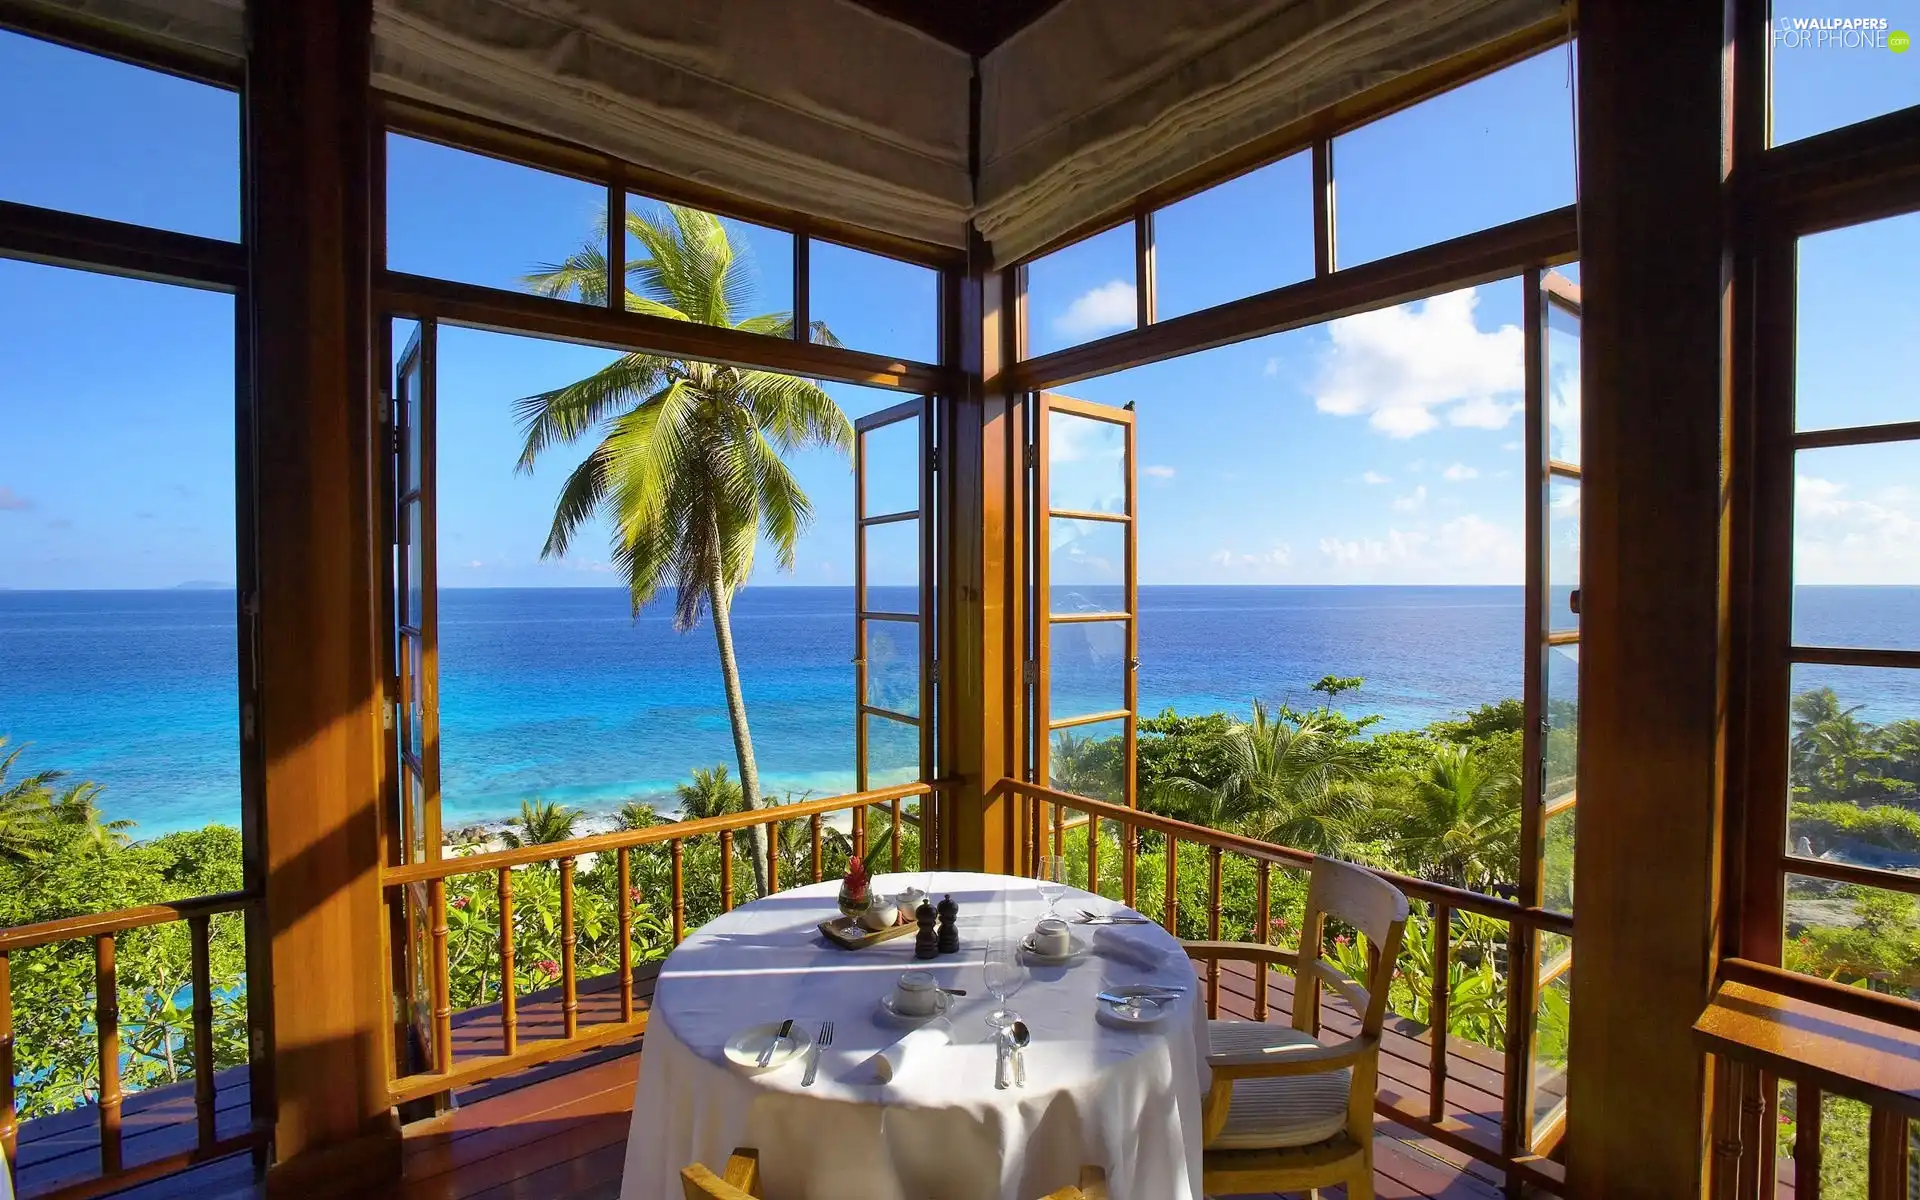 The hotel, Ocean, Seychelles, terrace